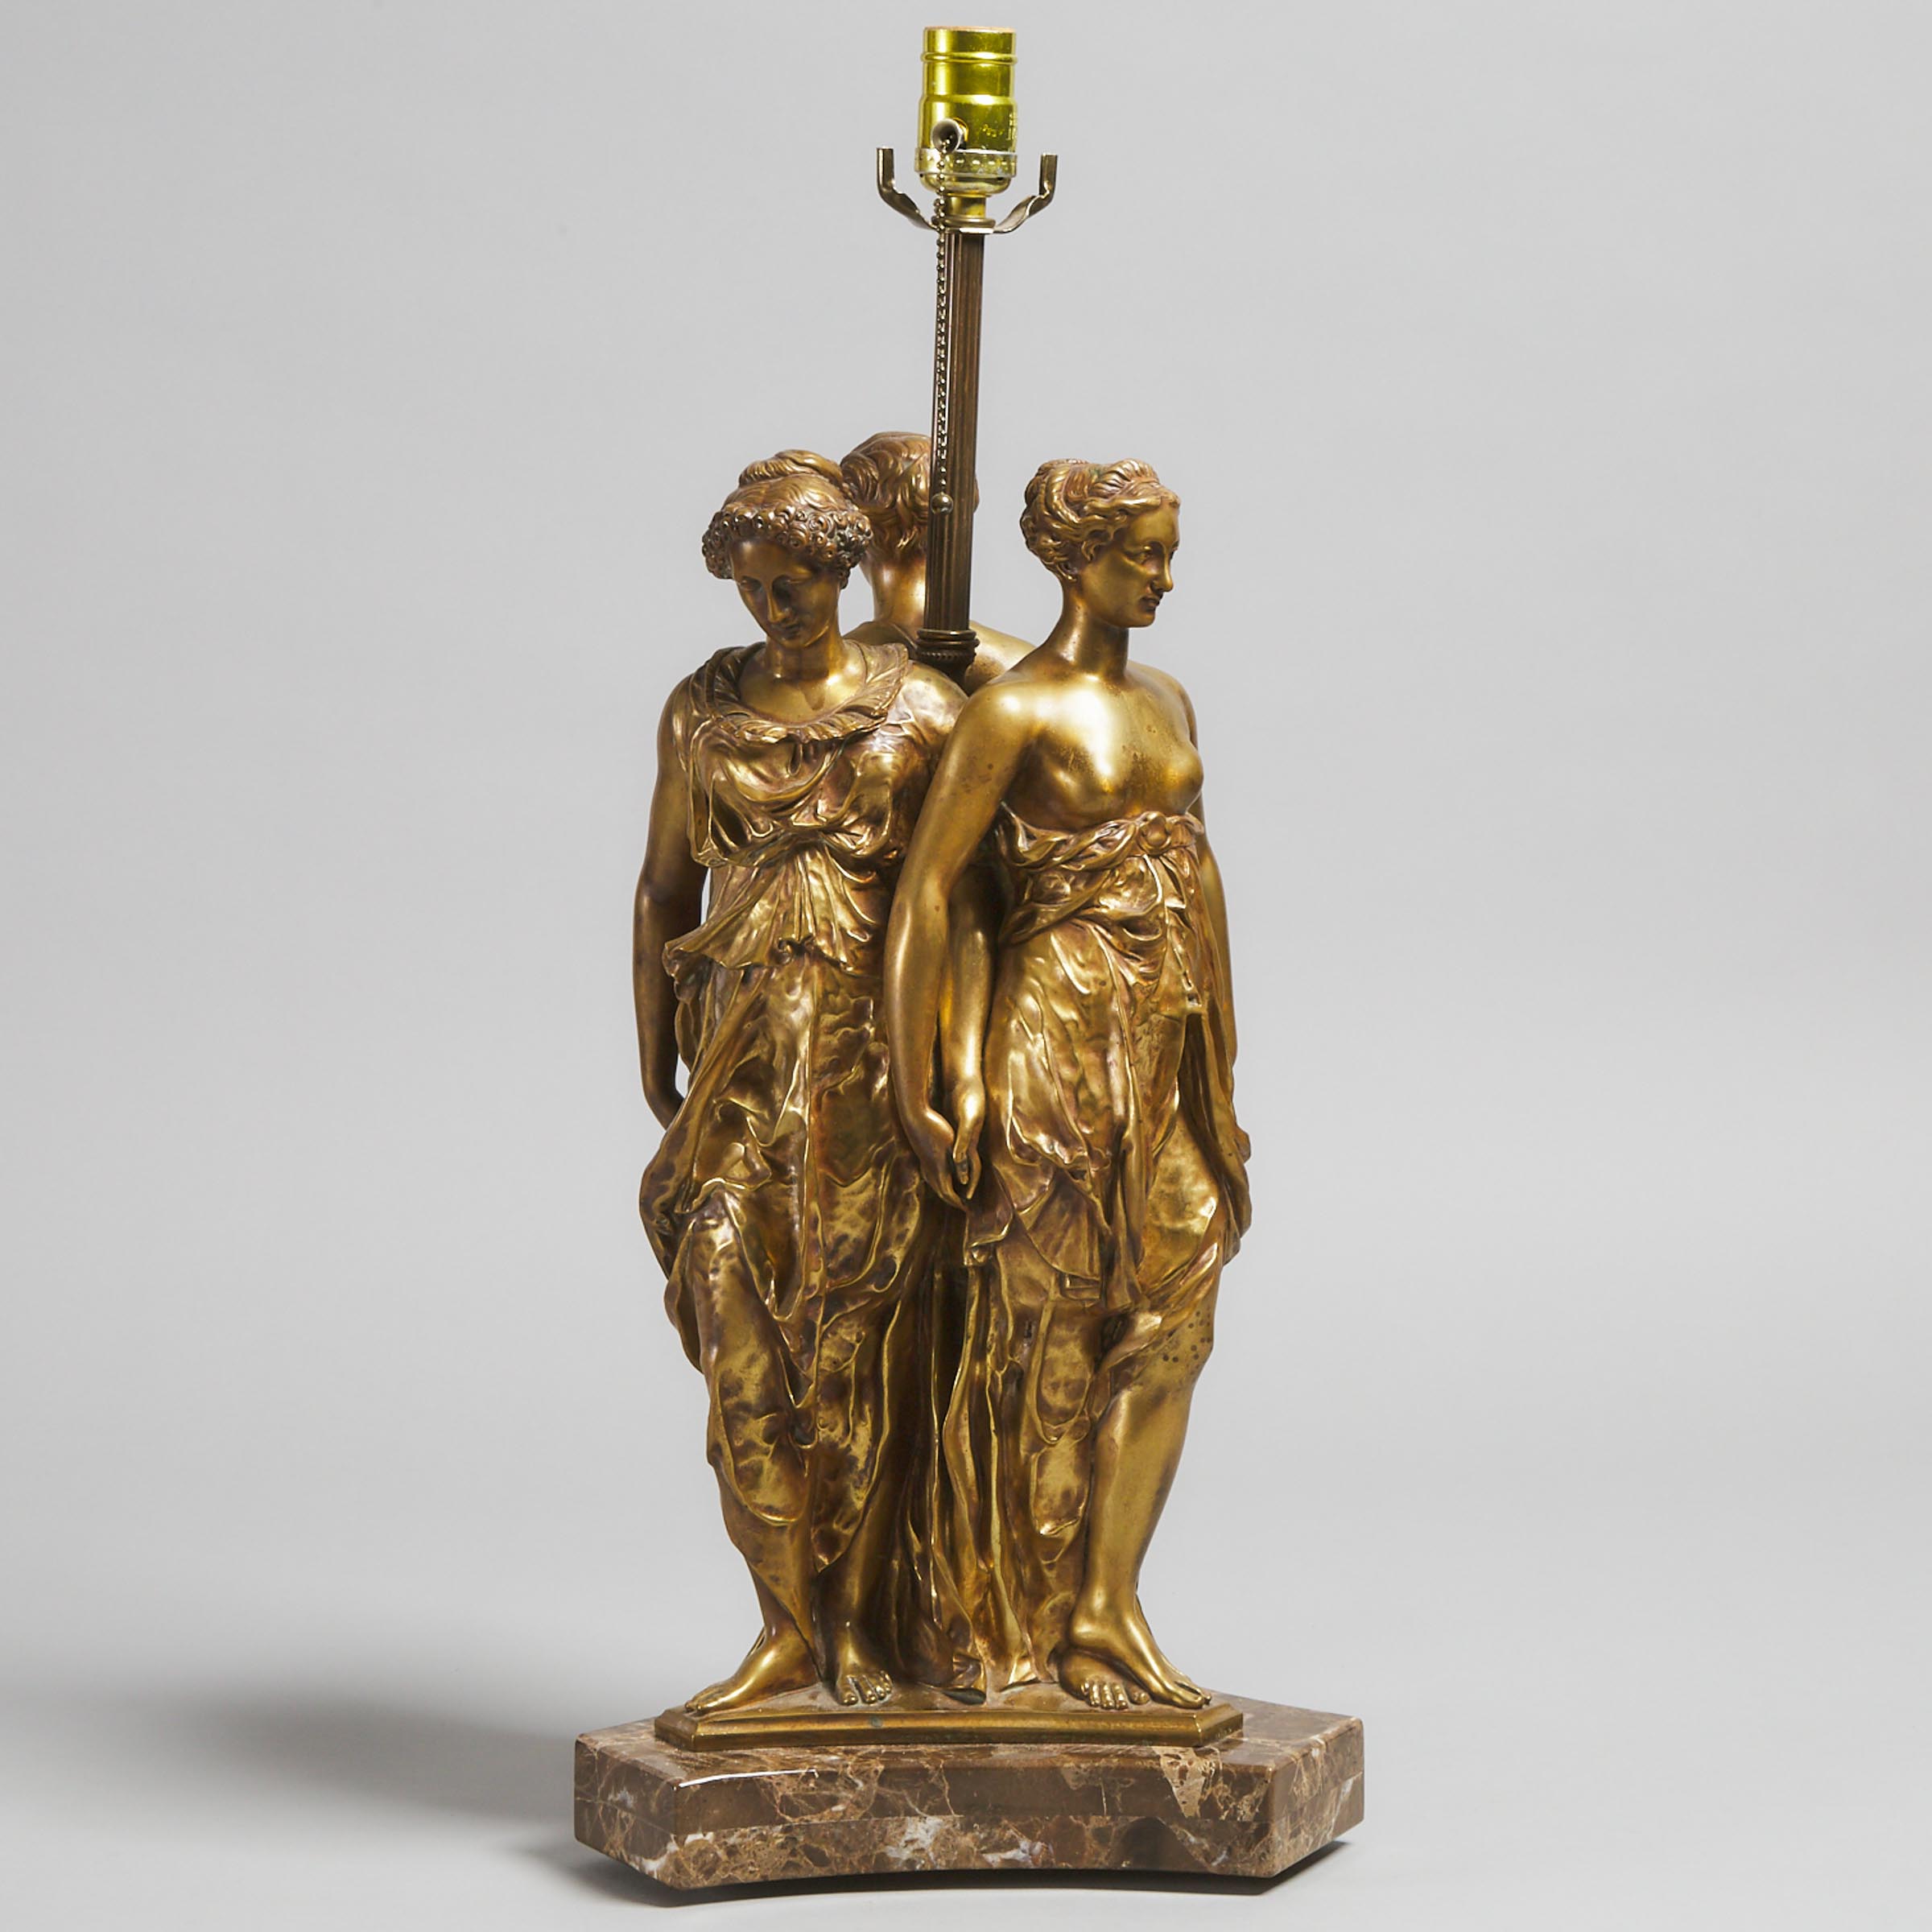 French Gilt Bronze 'Three Graces' Figural Table Lamp after Germain Pilon (c.1525-1590), c.1900